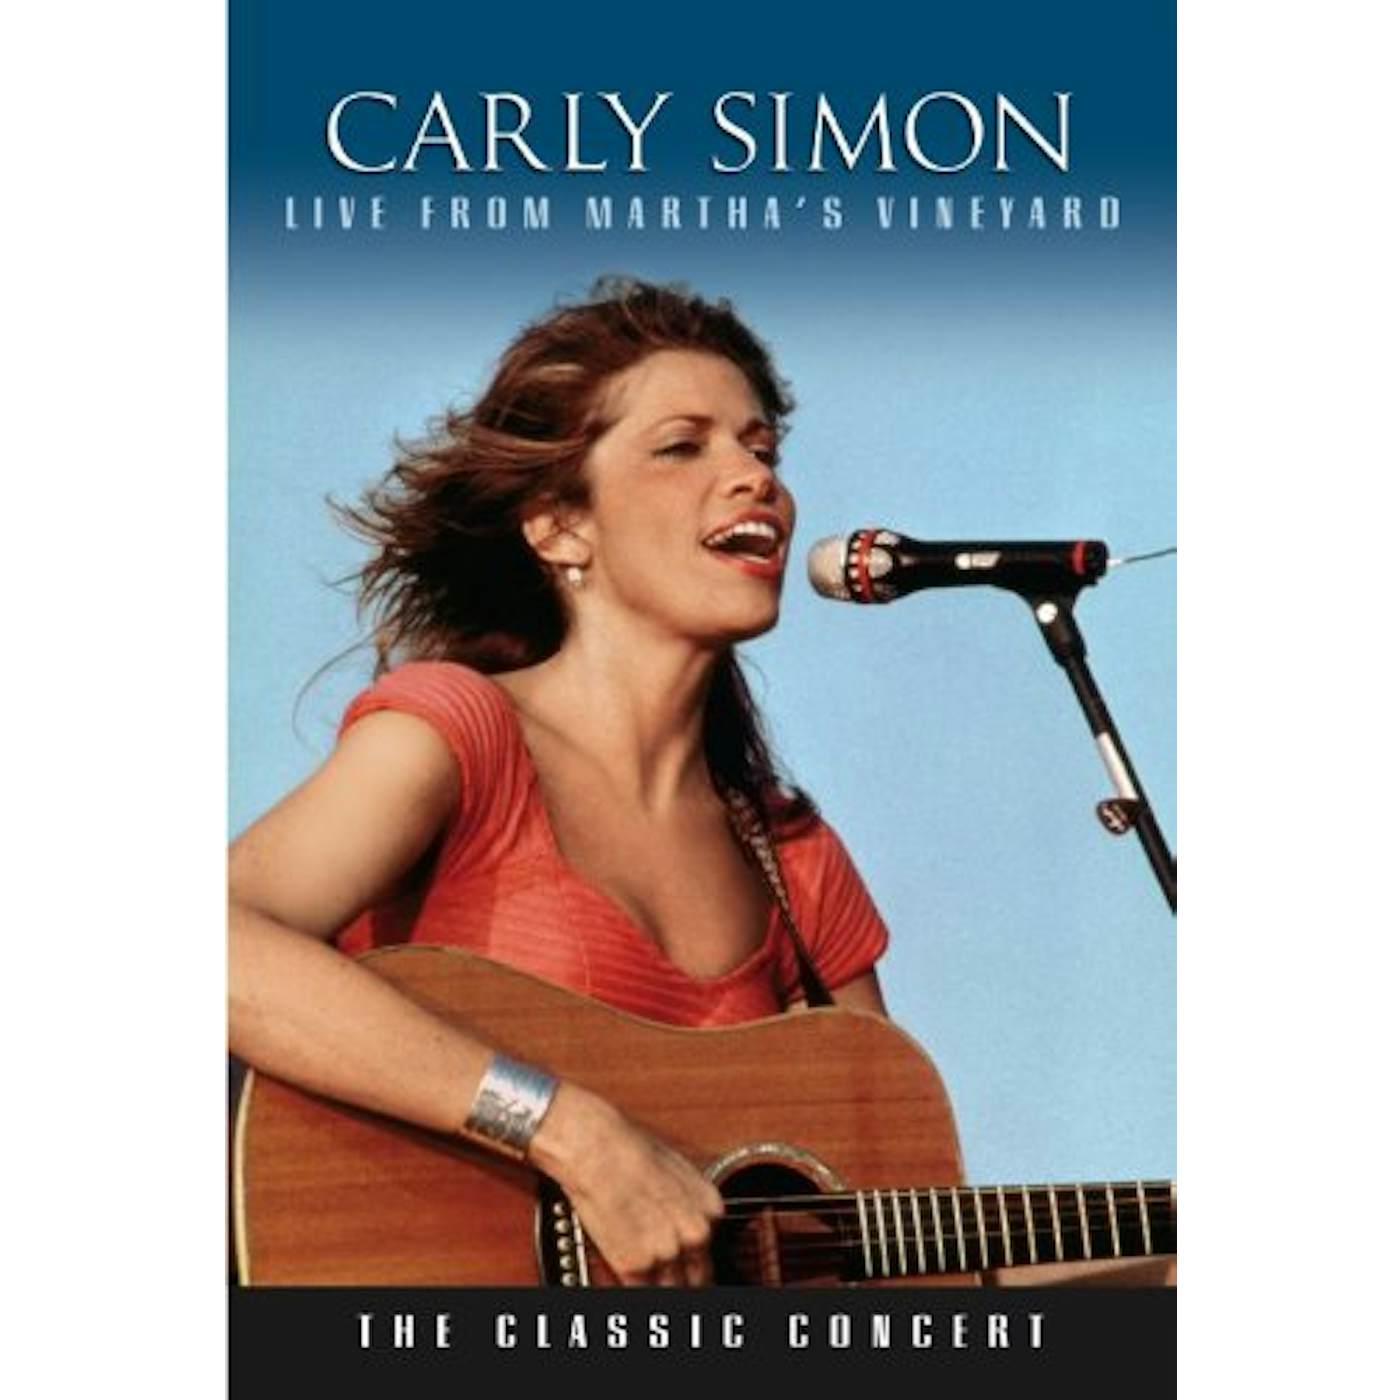 Carly Simon LIVE FROM MARTHA'S VINEYARD DVD